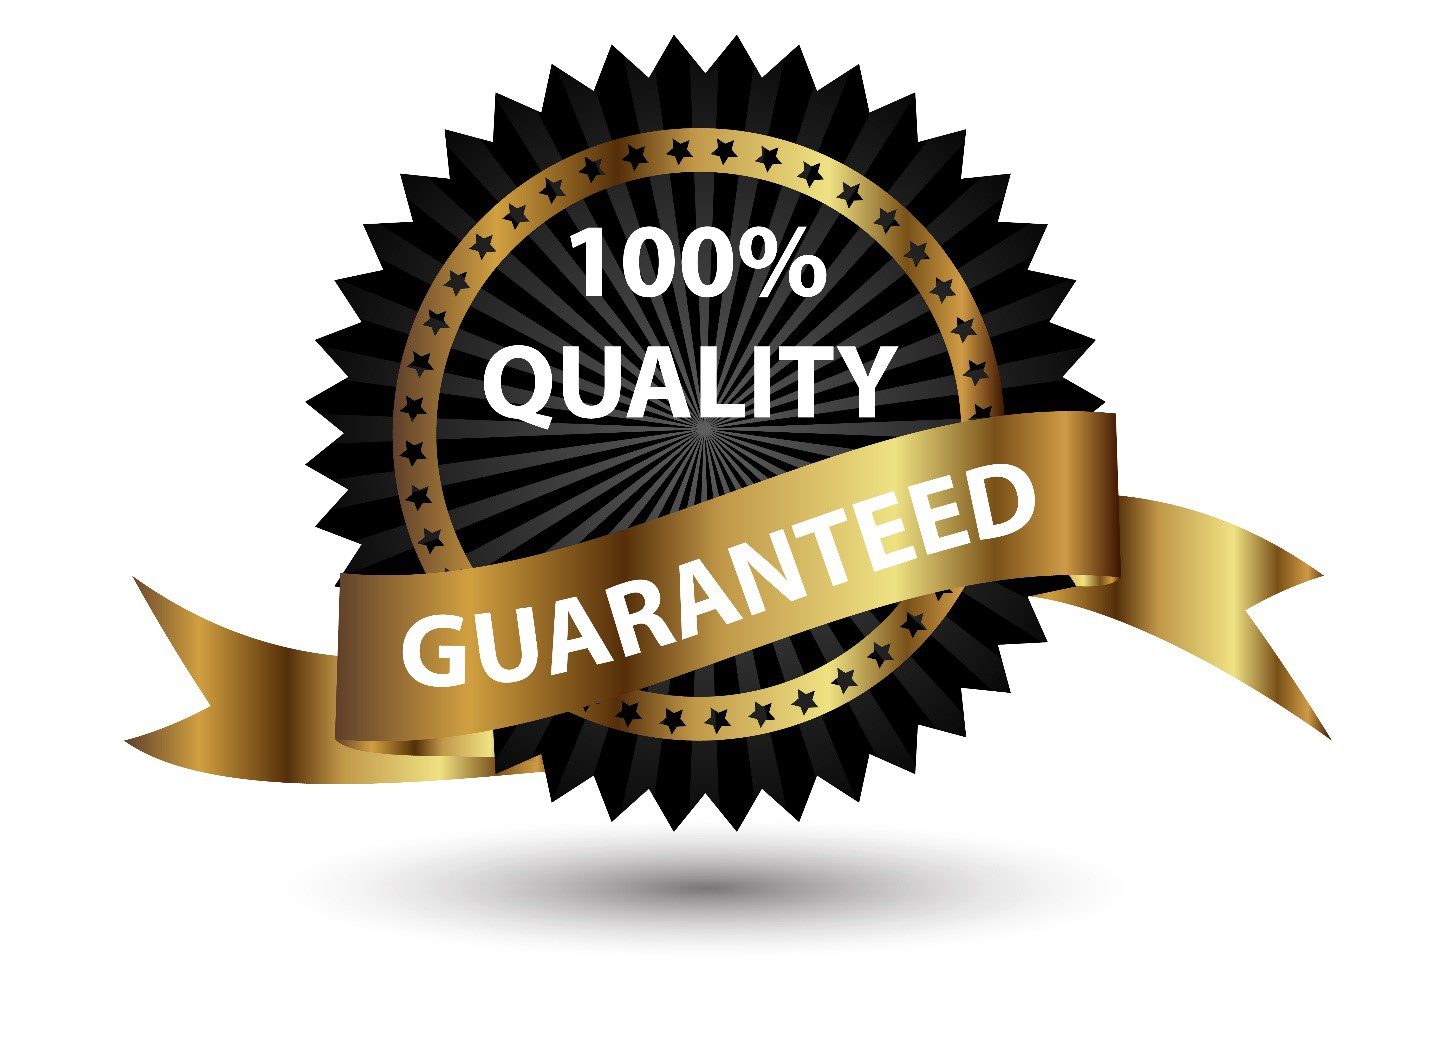 100% Quality Guaranteed on all Peerless Boilers